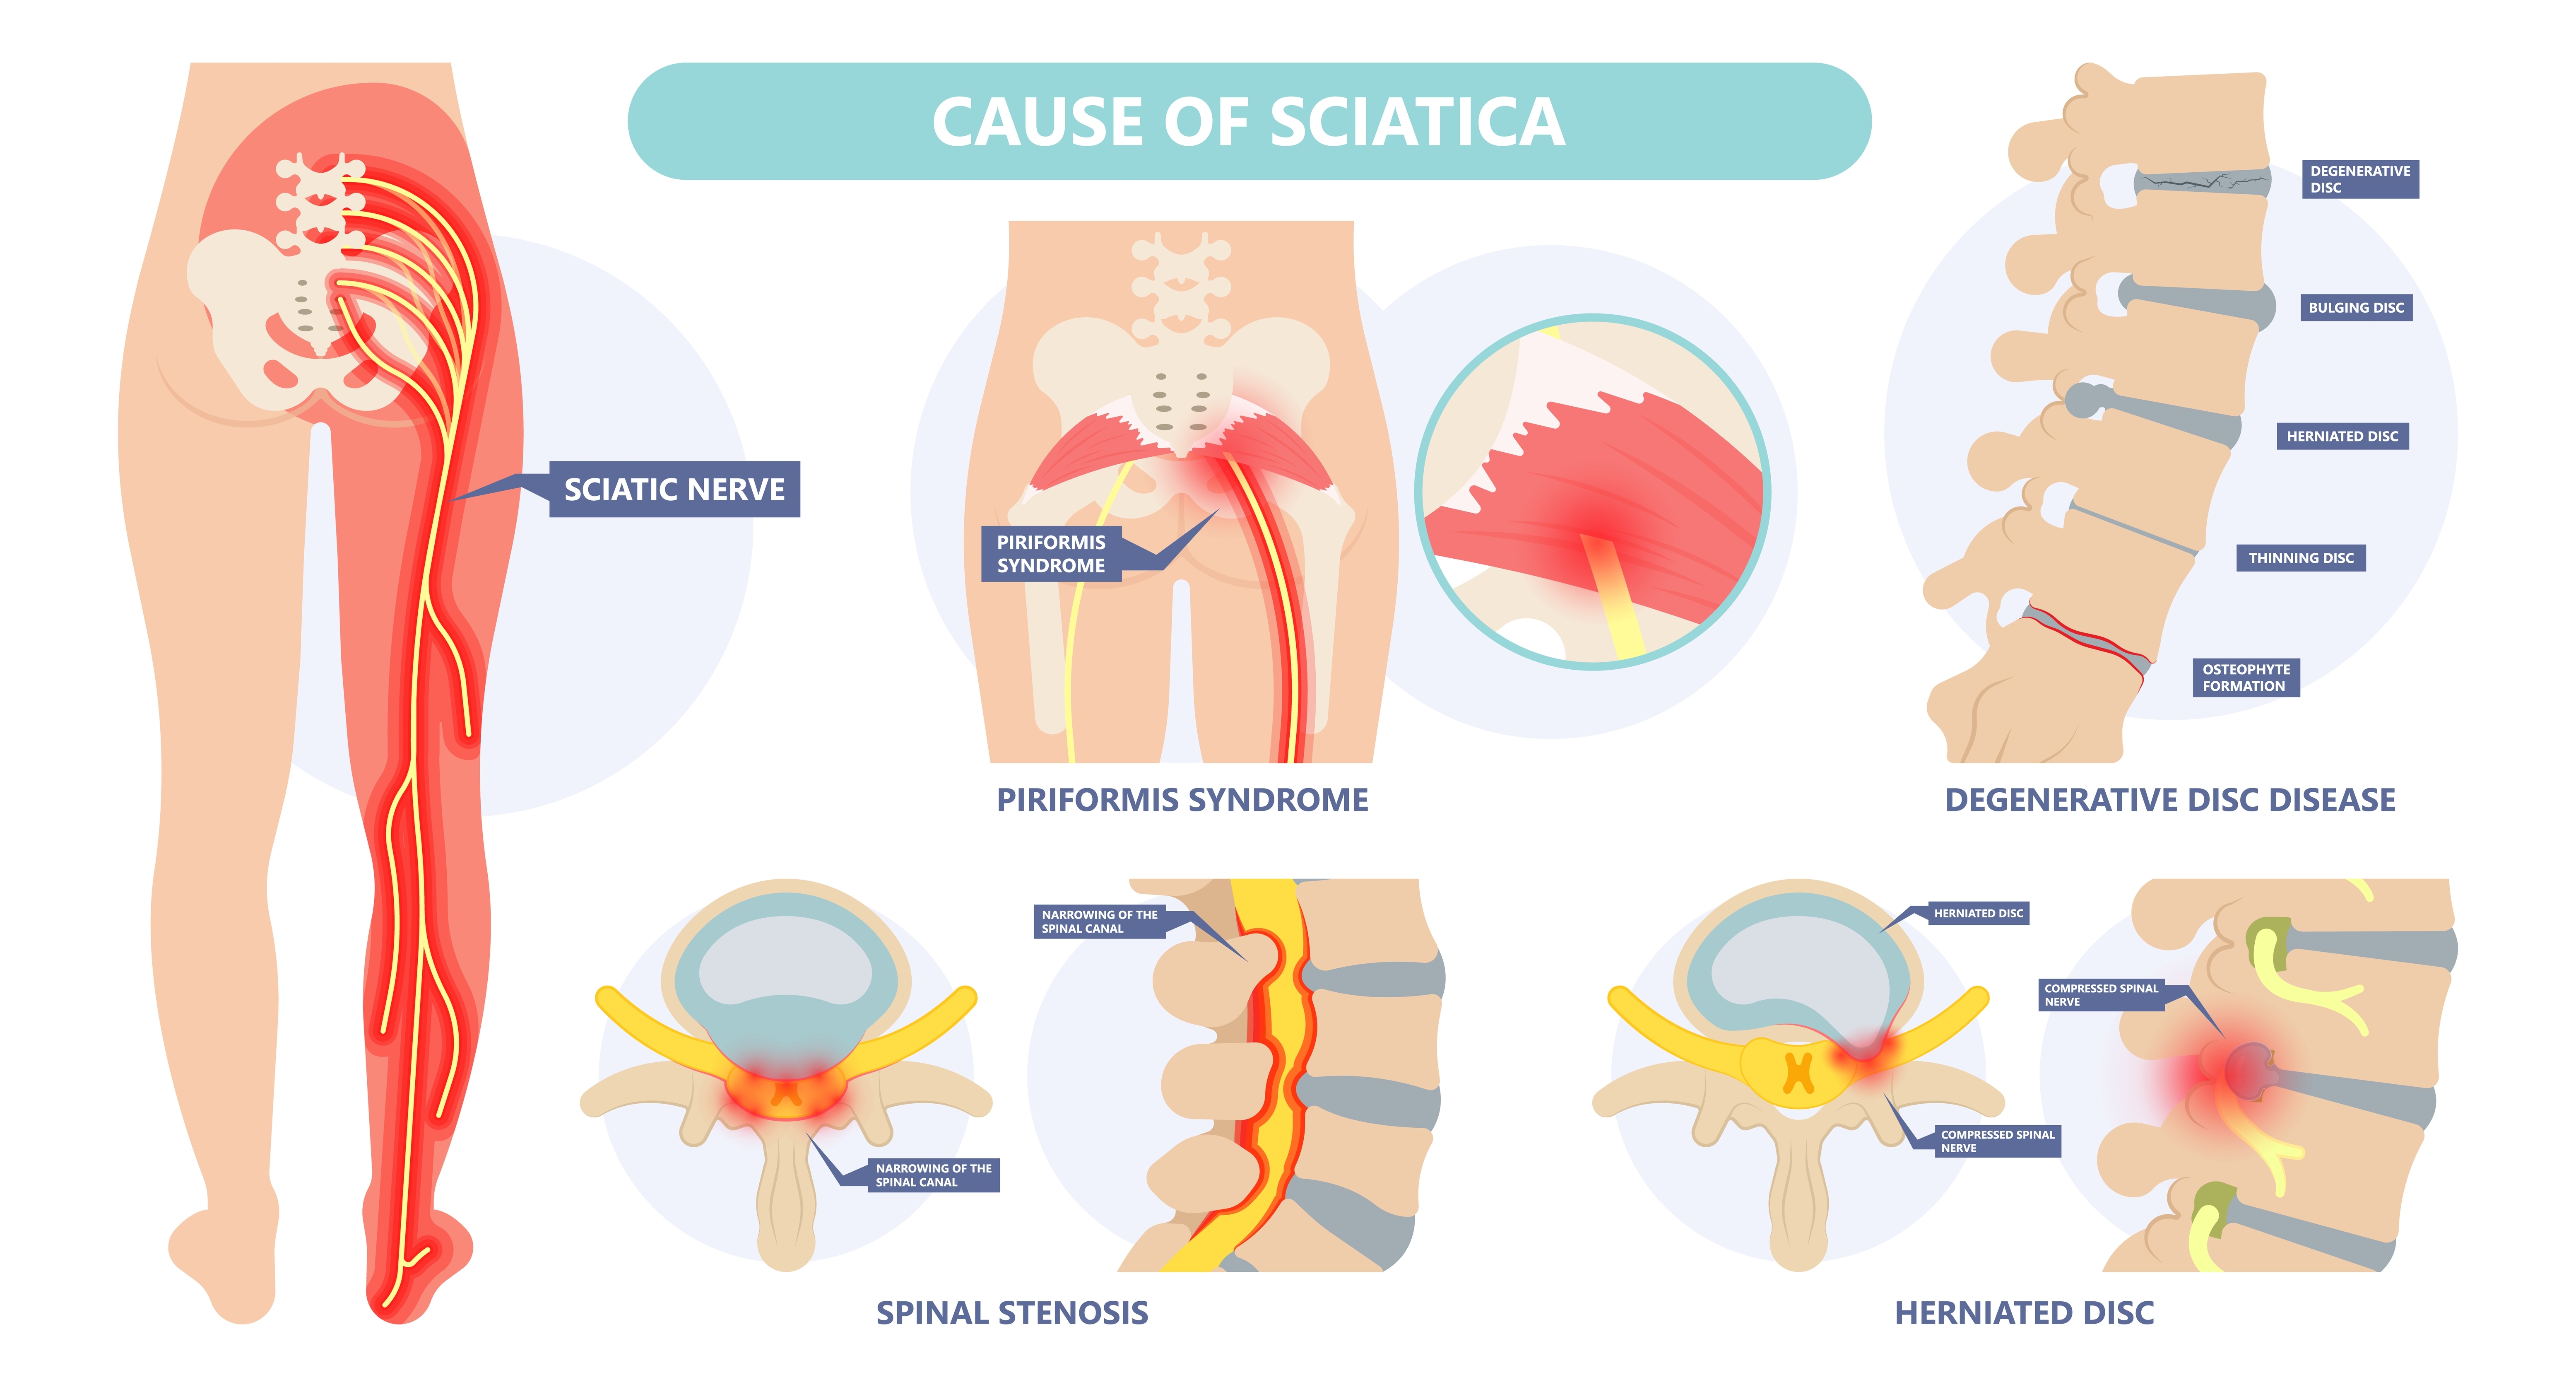 Top 4 Causes of Sciatica